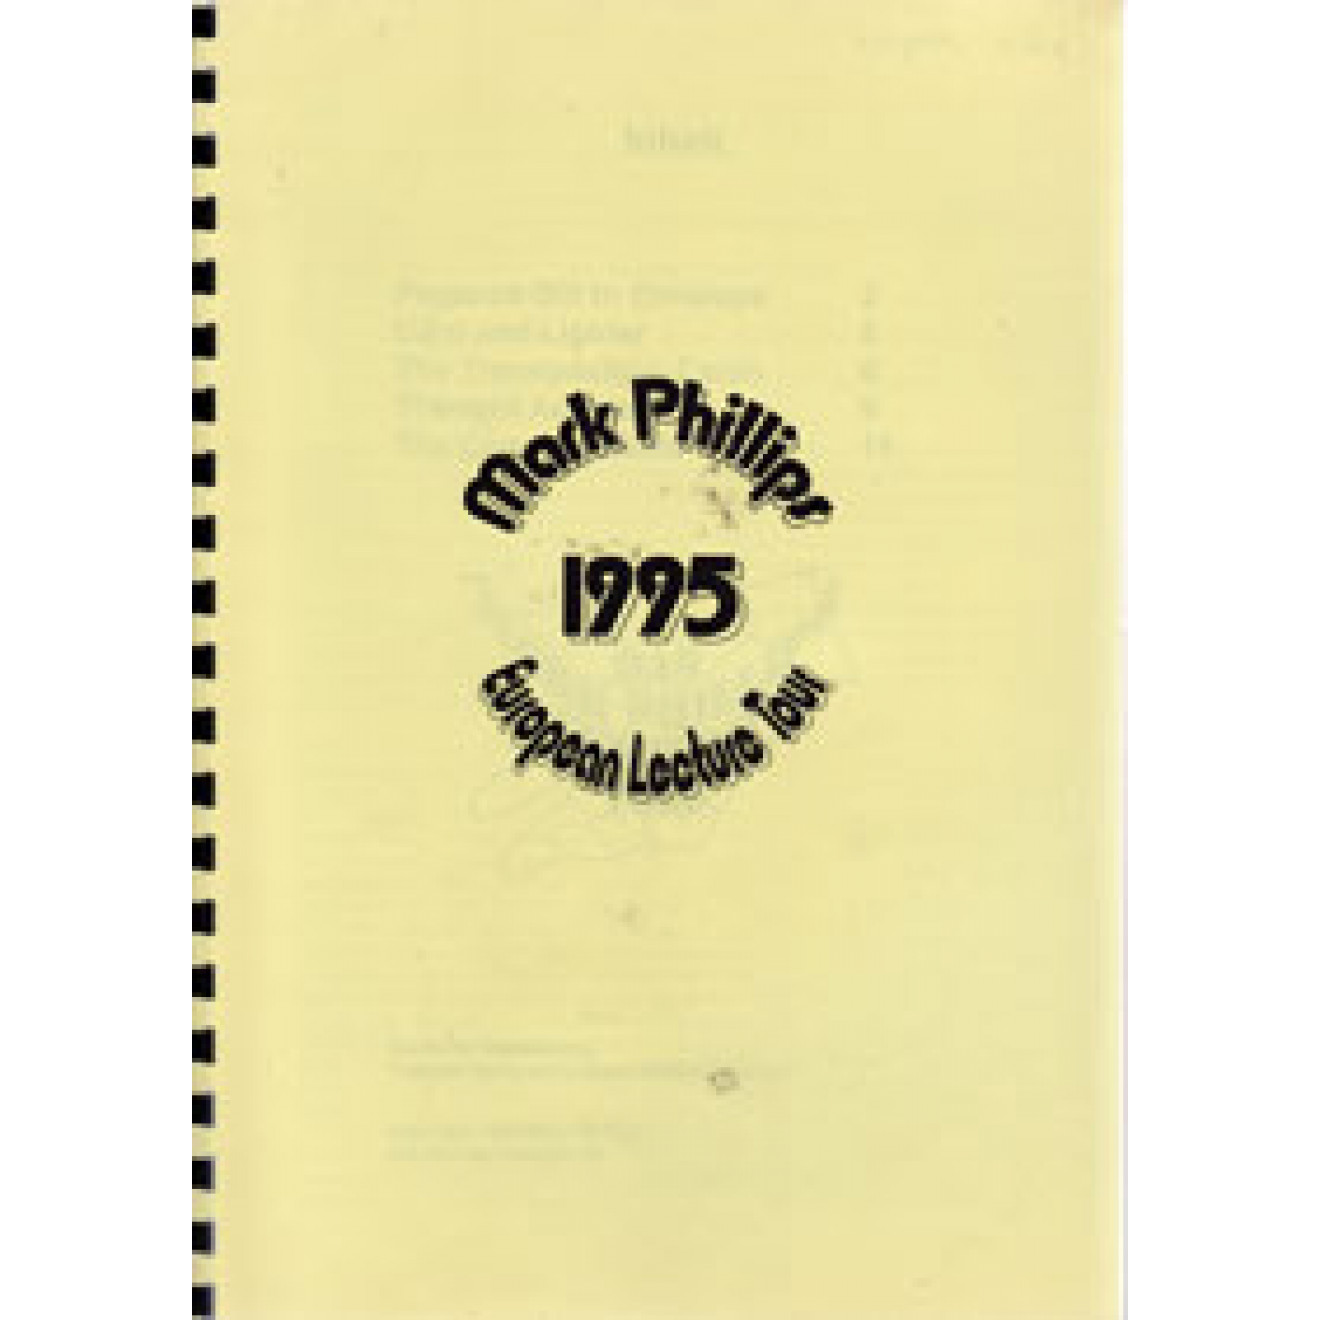 Das Mark Phillips Seminar 1993